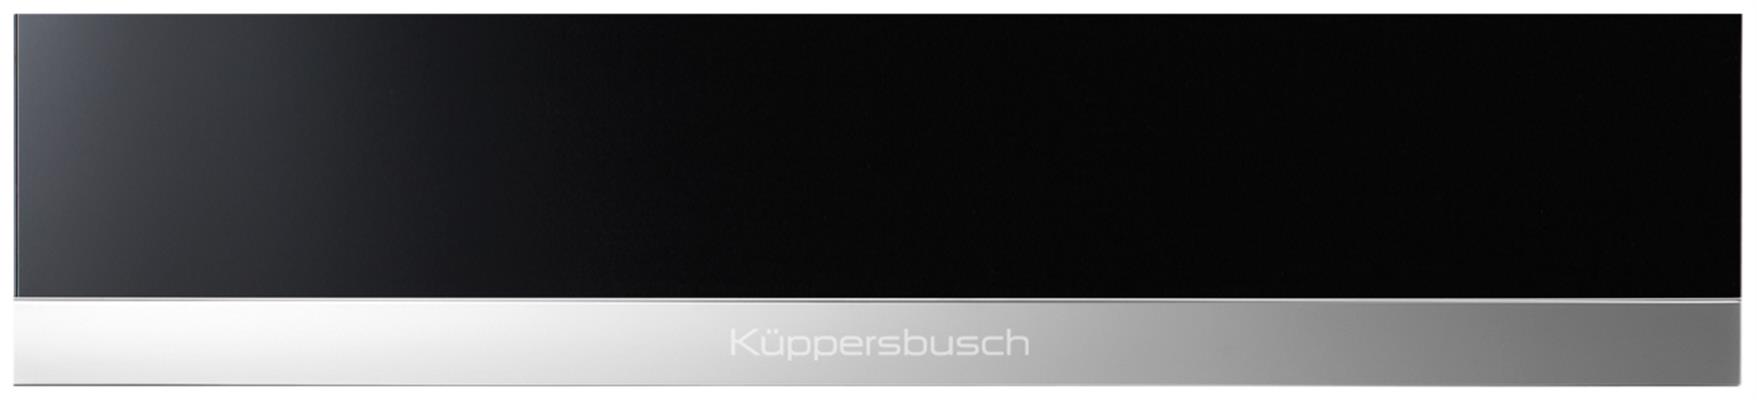 6014J3-Kuppersbusch-Opberglades